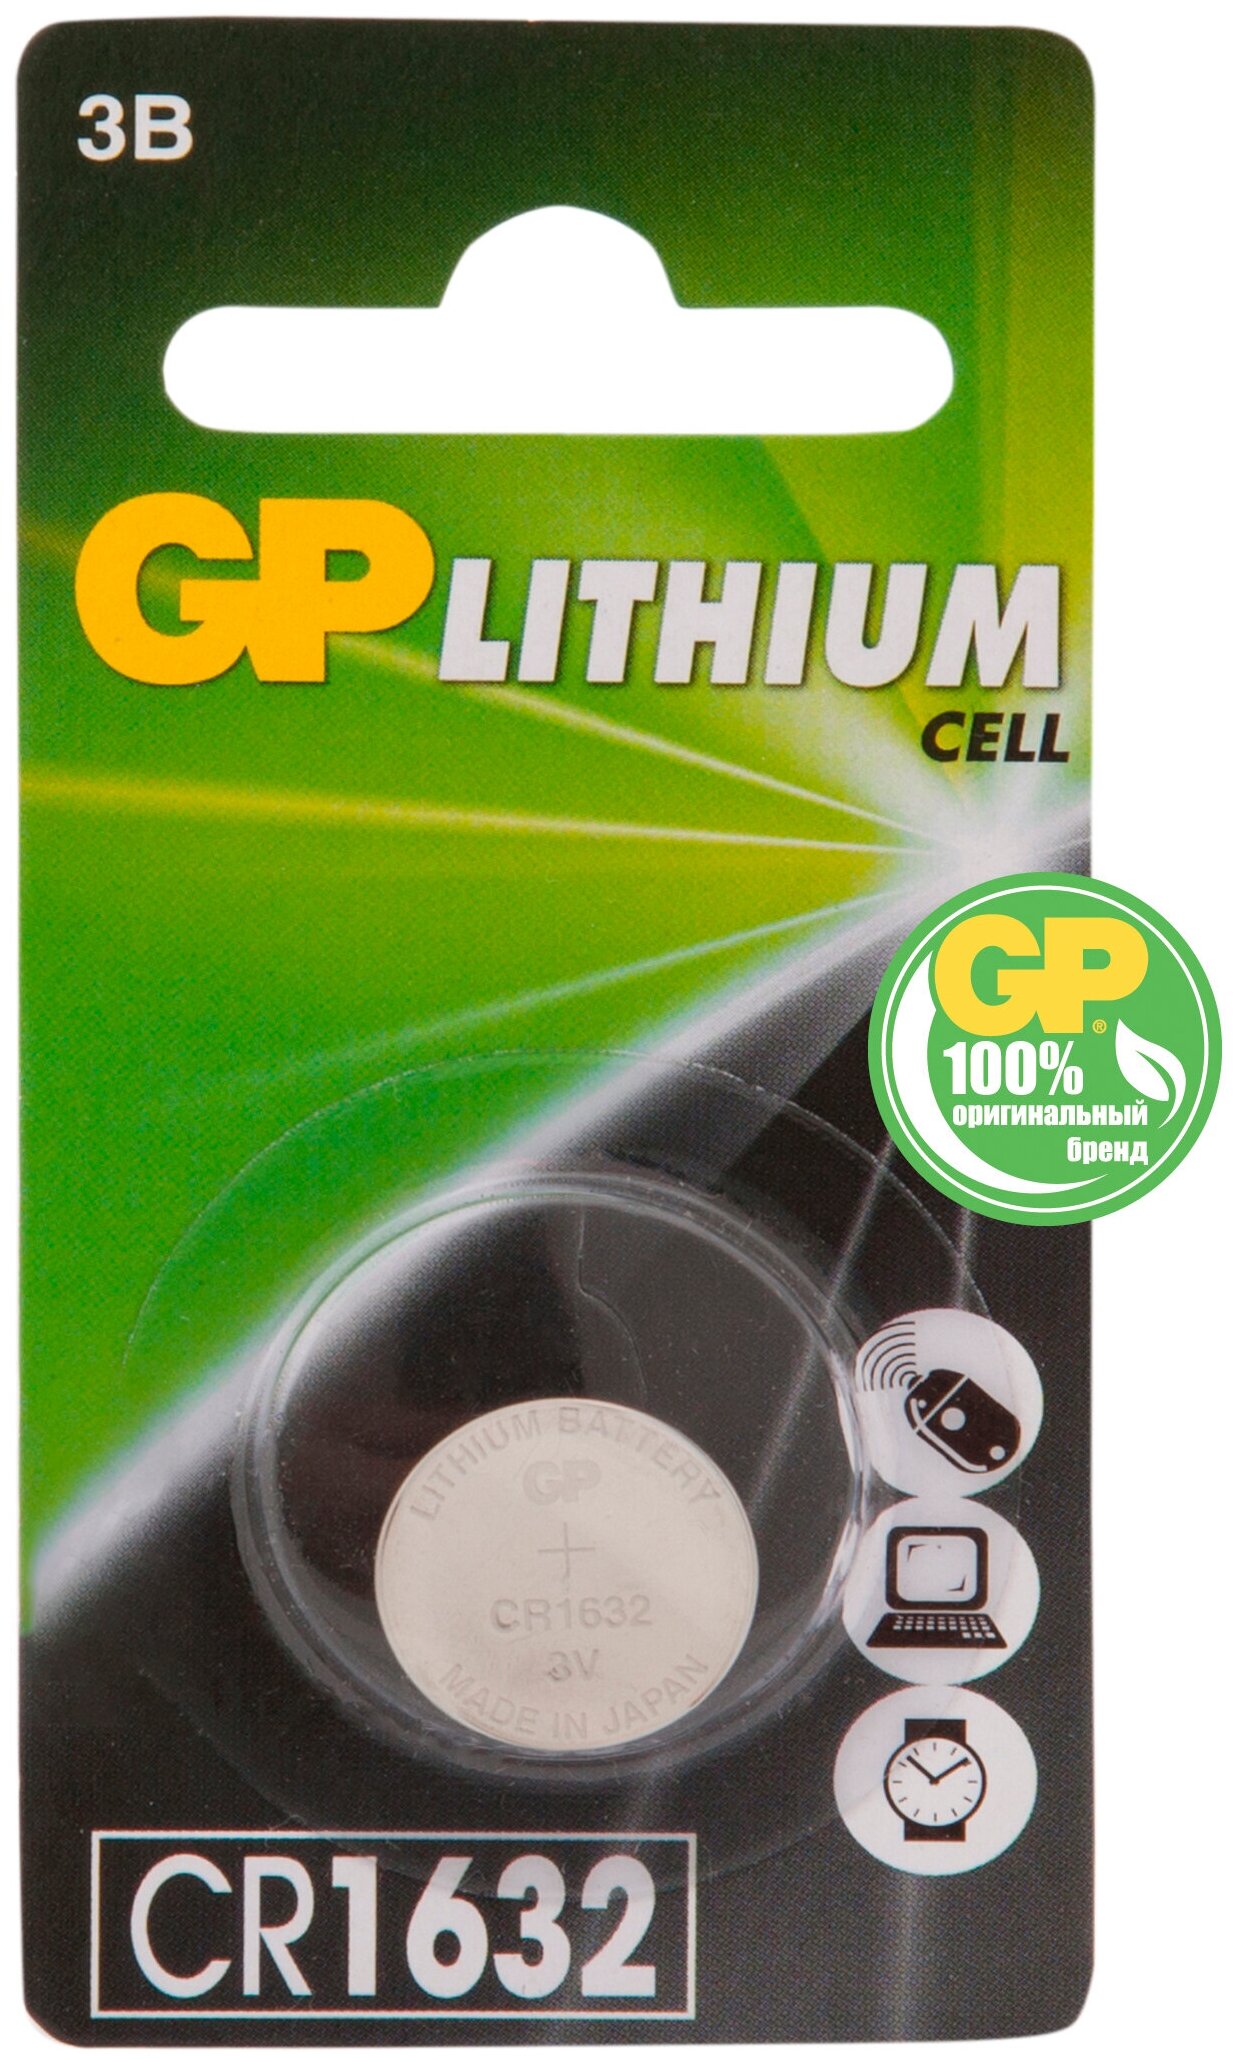 Батарея GP Lithium, CR1632, 3V, 1шт. (CR1632-7CR110/100/900) CR1632-7CR110/100/900 - фото 1